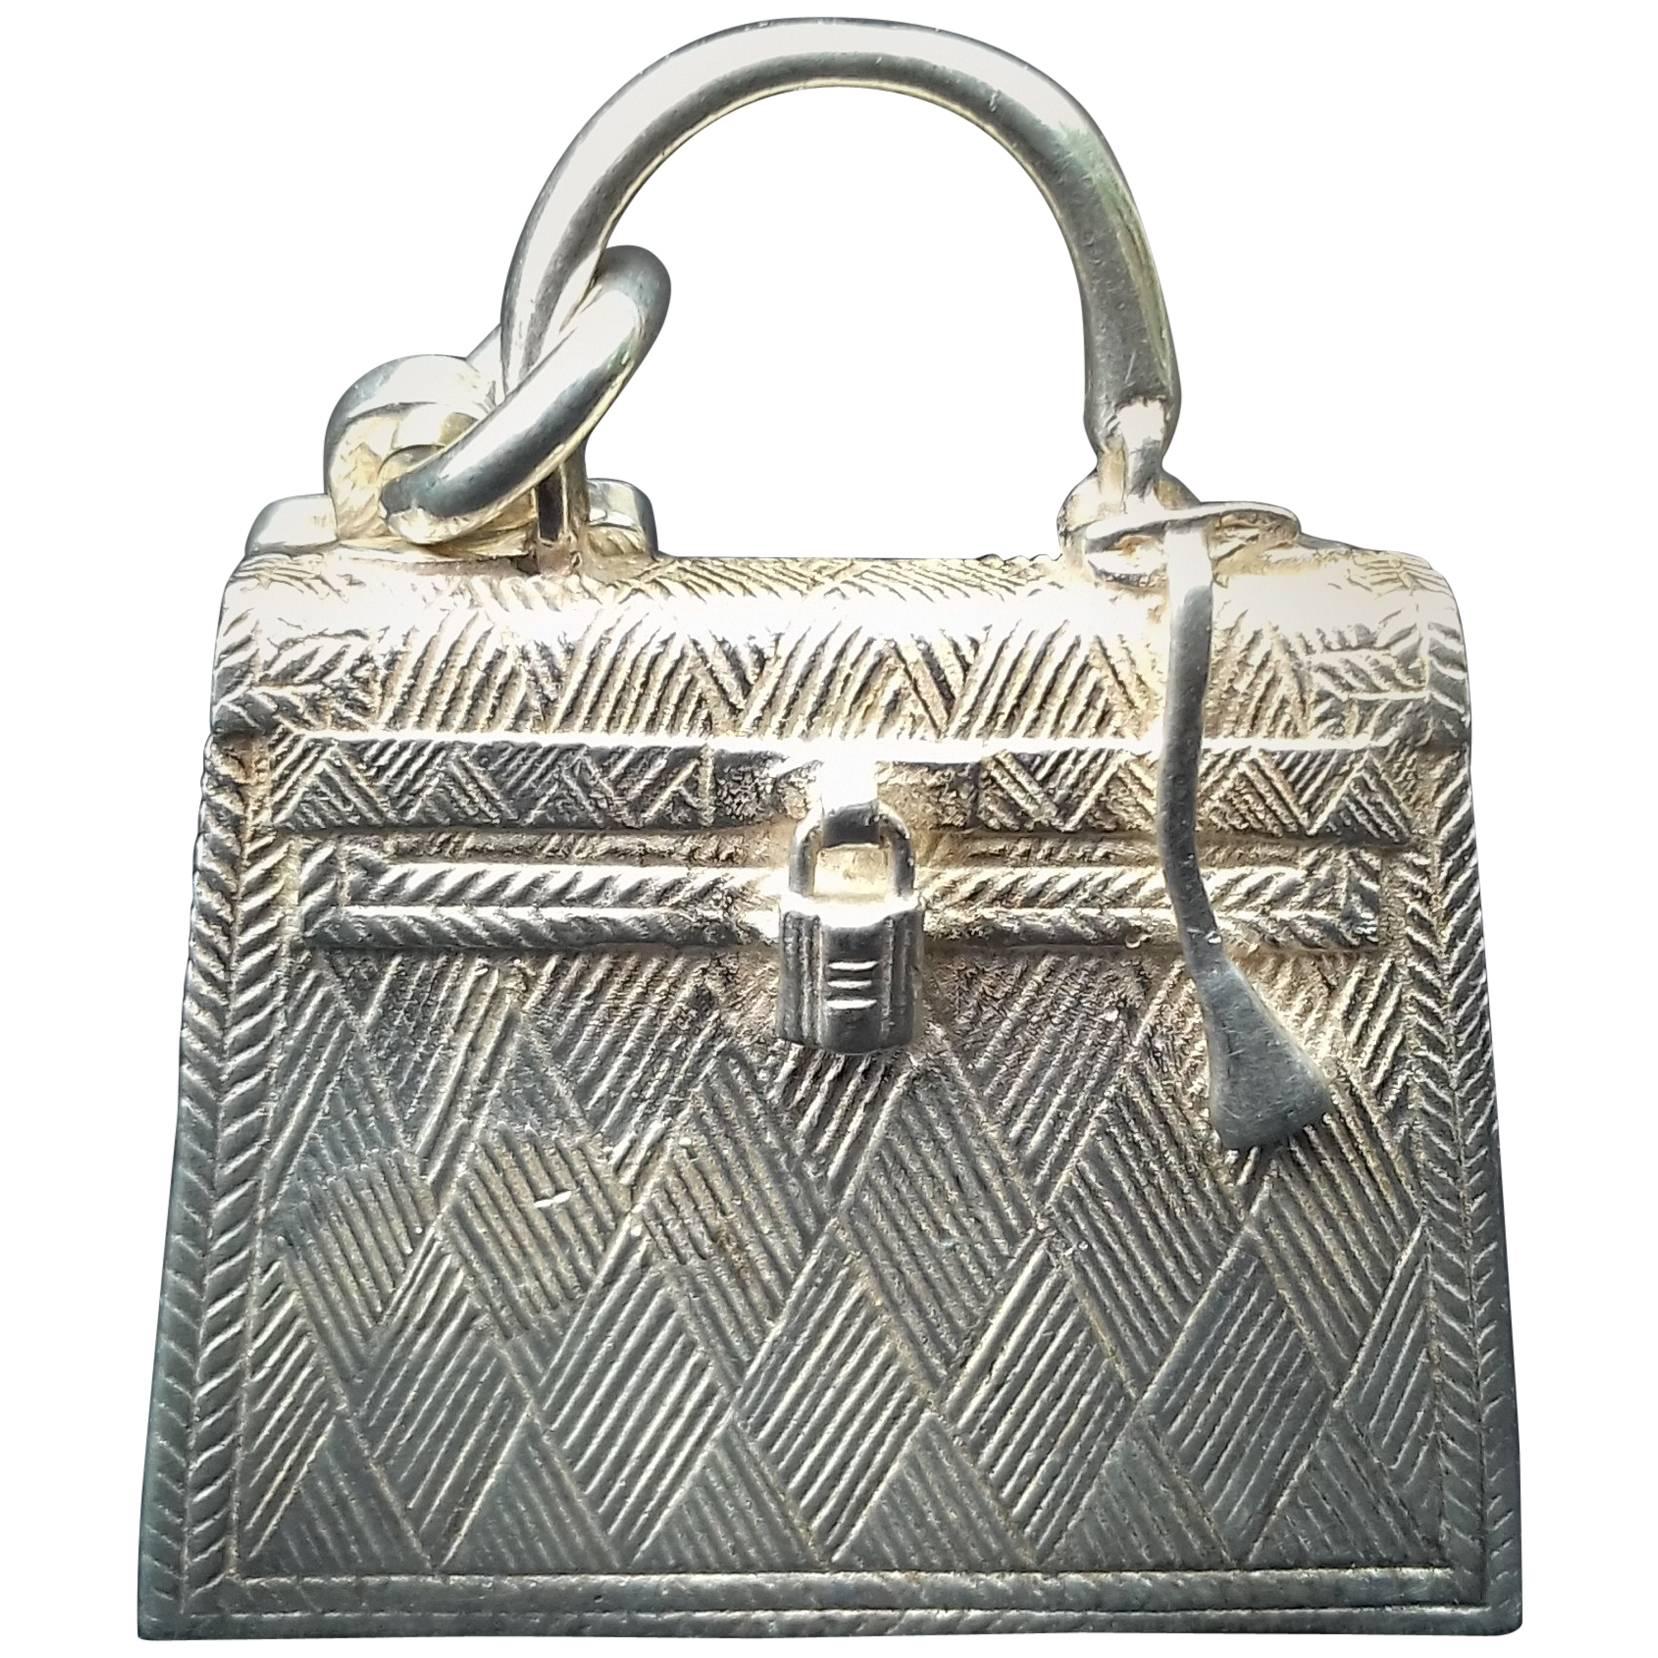 Hermès Key Ring / Holder / Chain Kelly Bag Silver Pendant Charm 